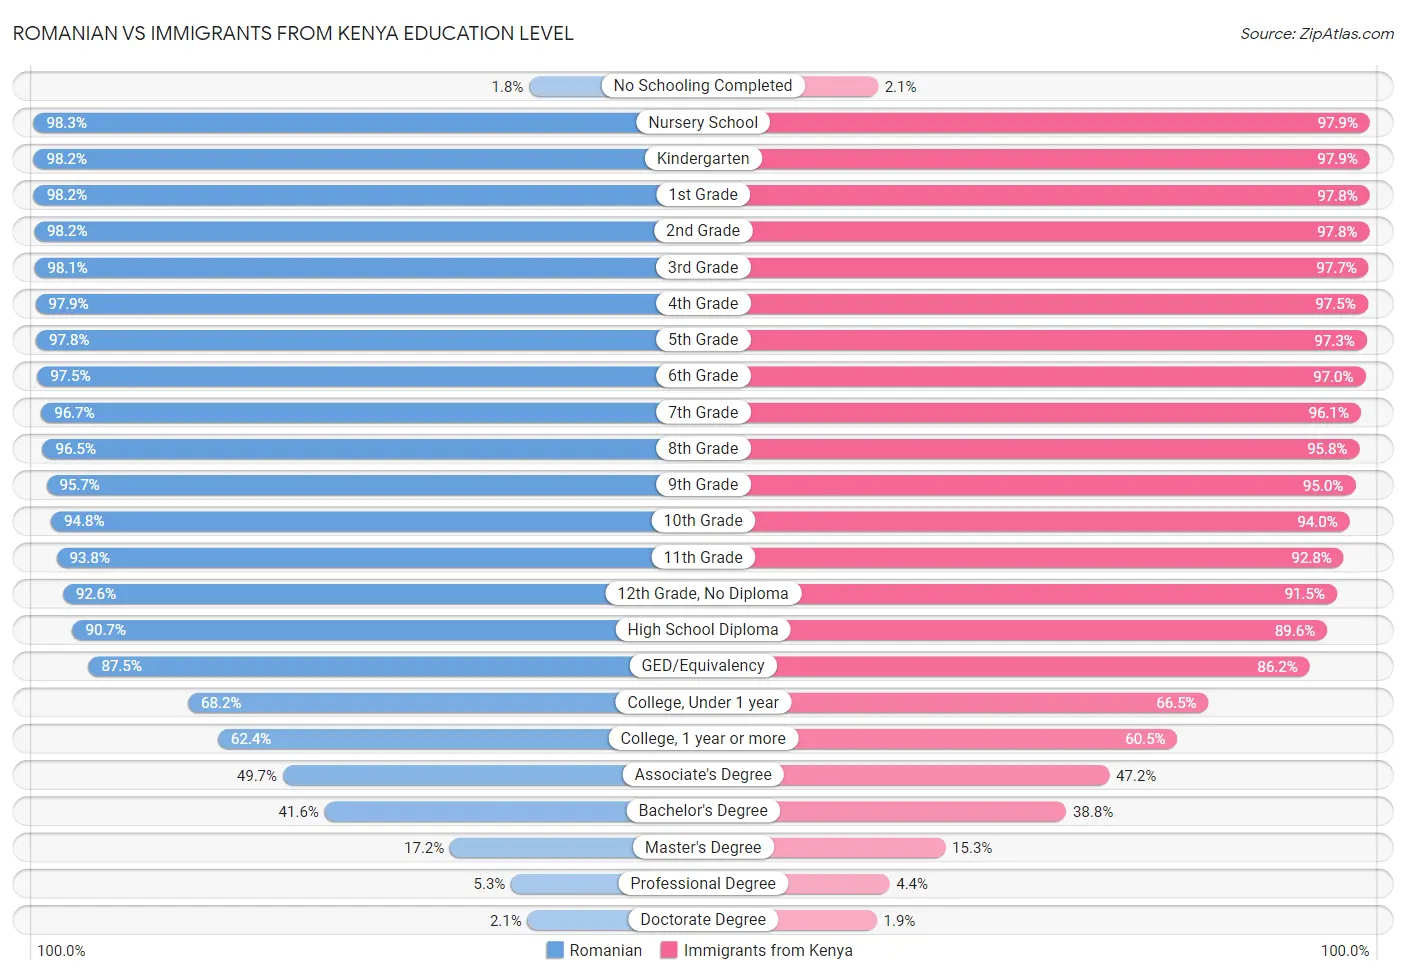 Romanian vs Immigrants from Kenya Education Level